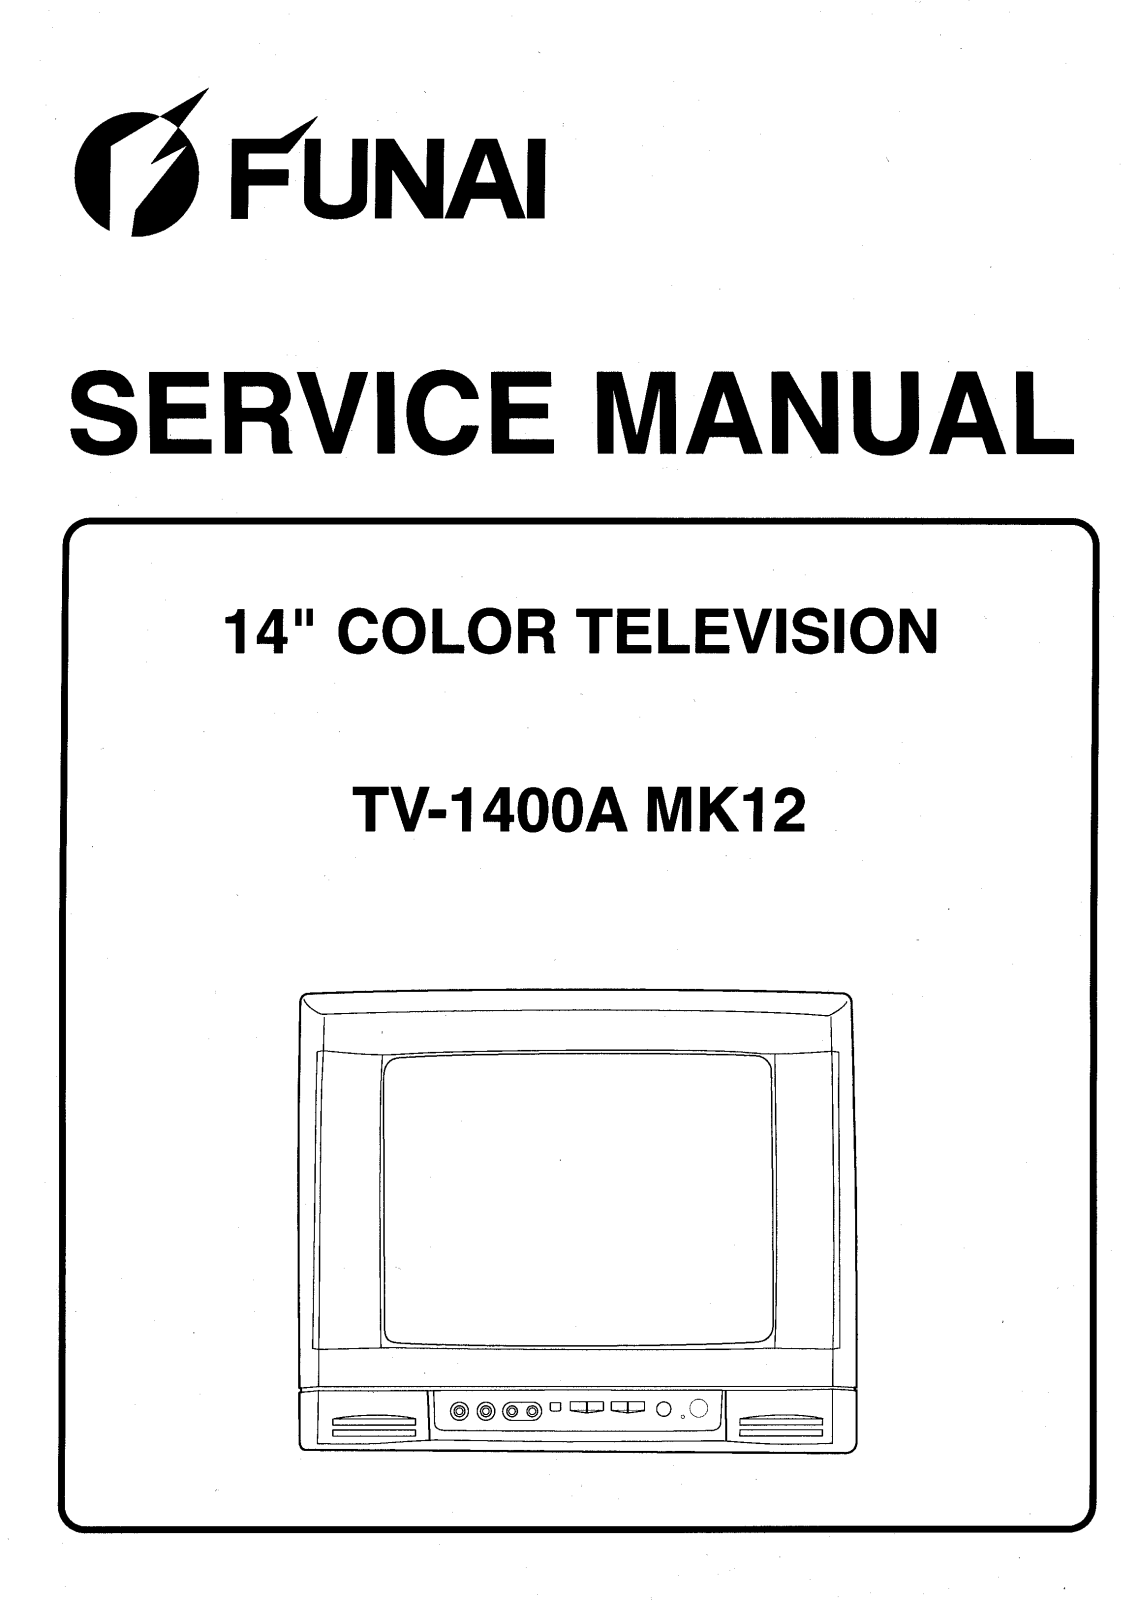 Funai TV-1400A MK12 Service Manual